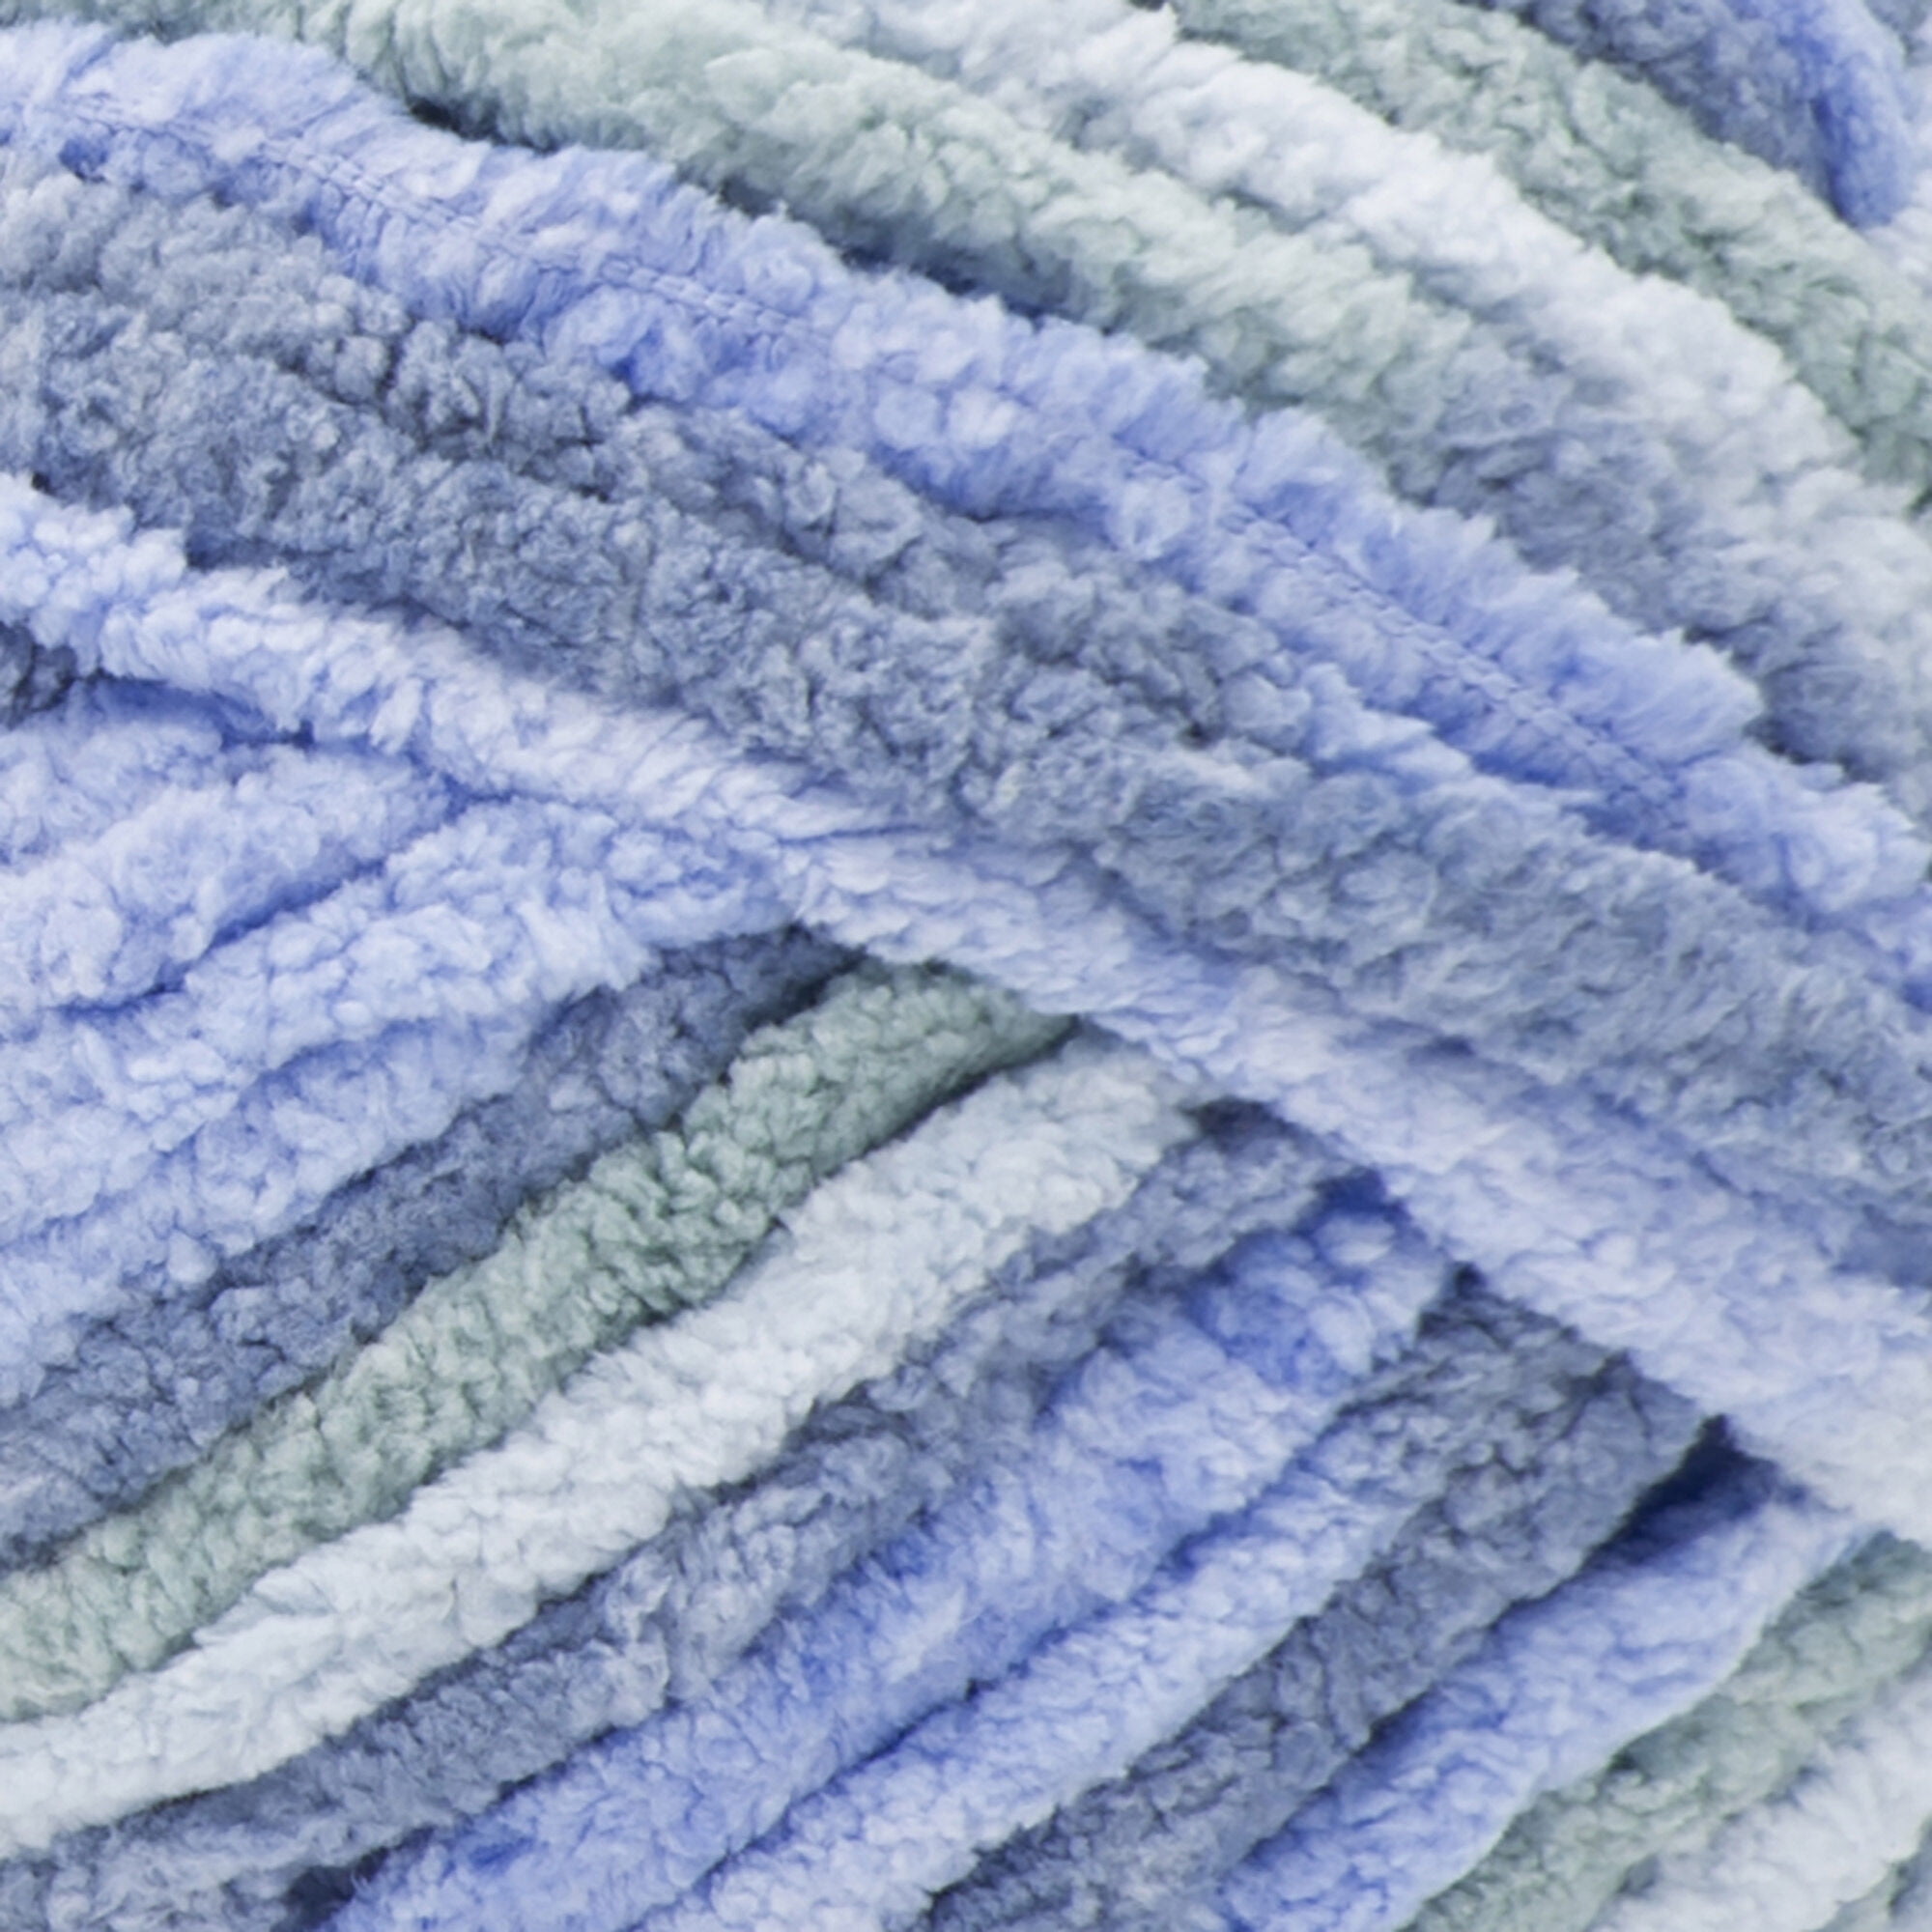  Bernat Baby Blanket Yarn - Baby Blue Green 220 yd.